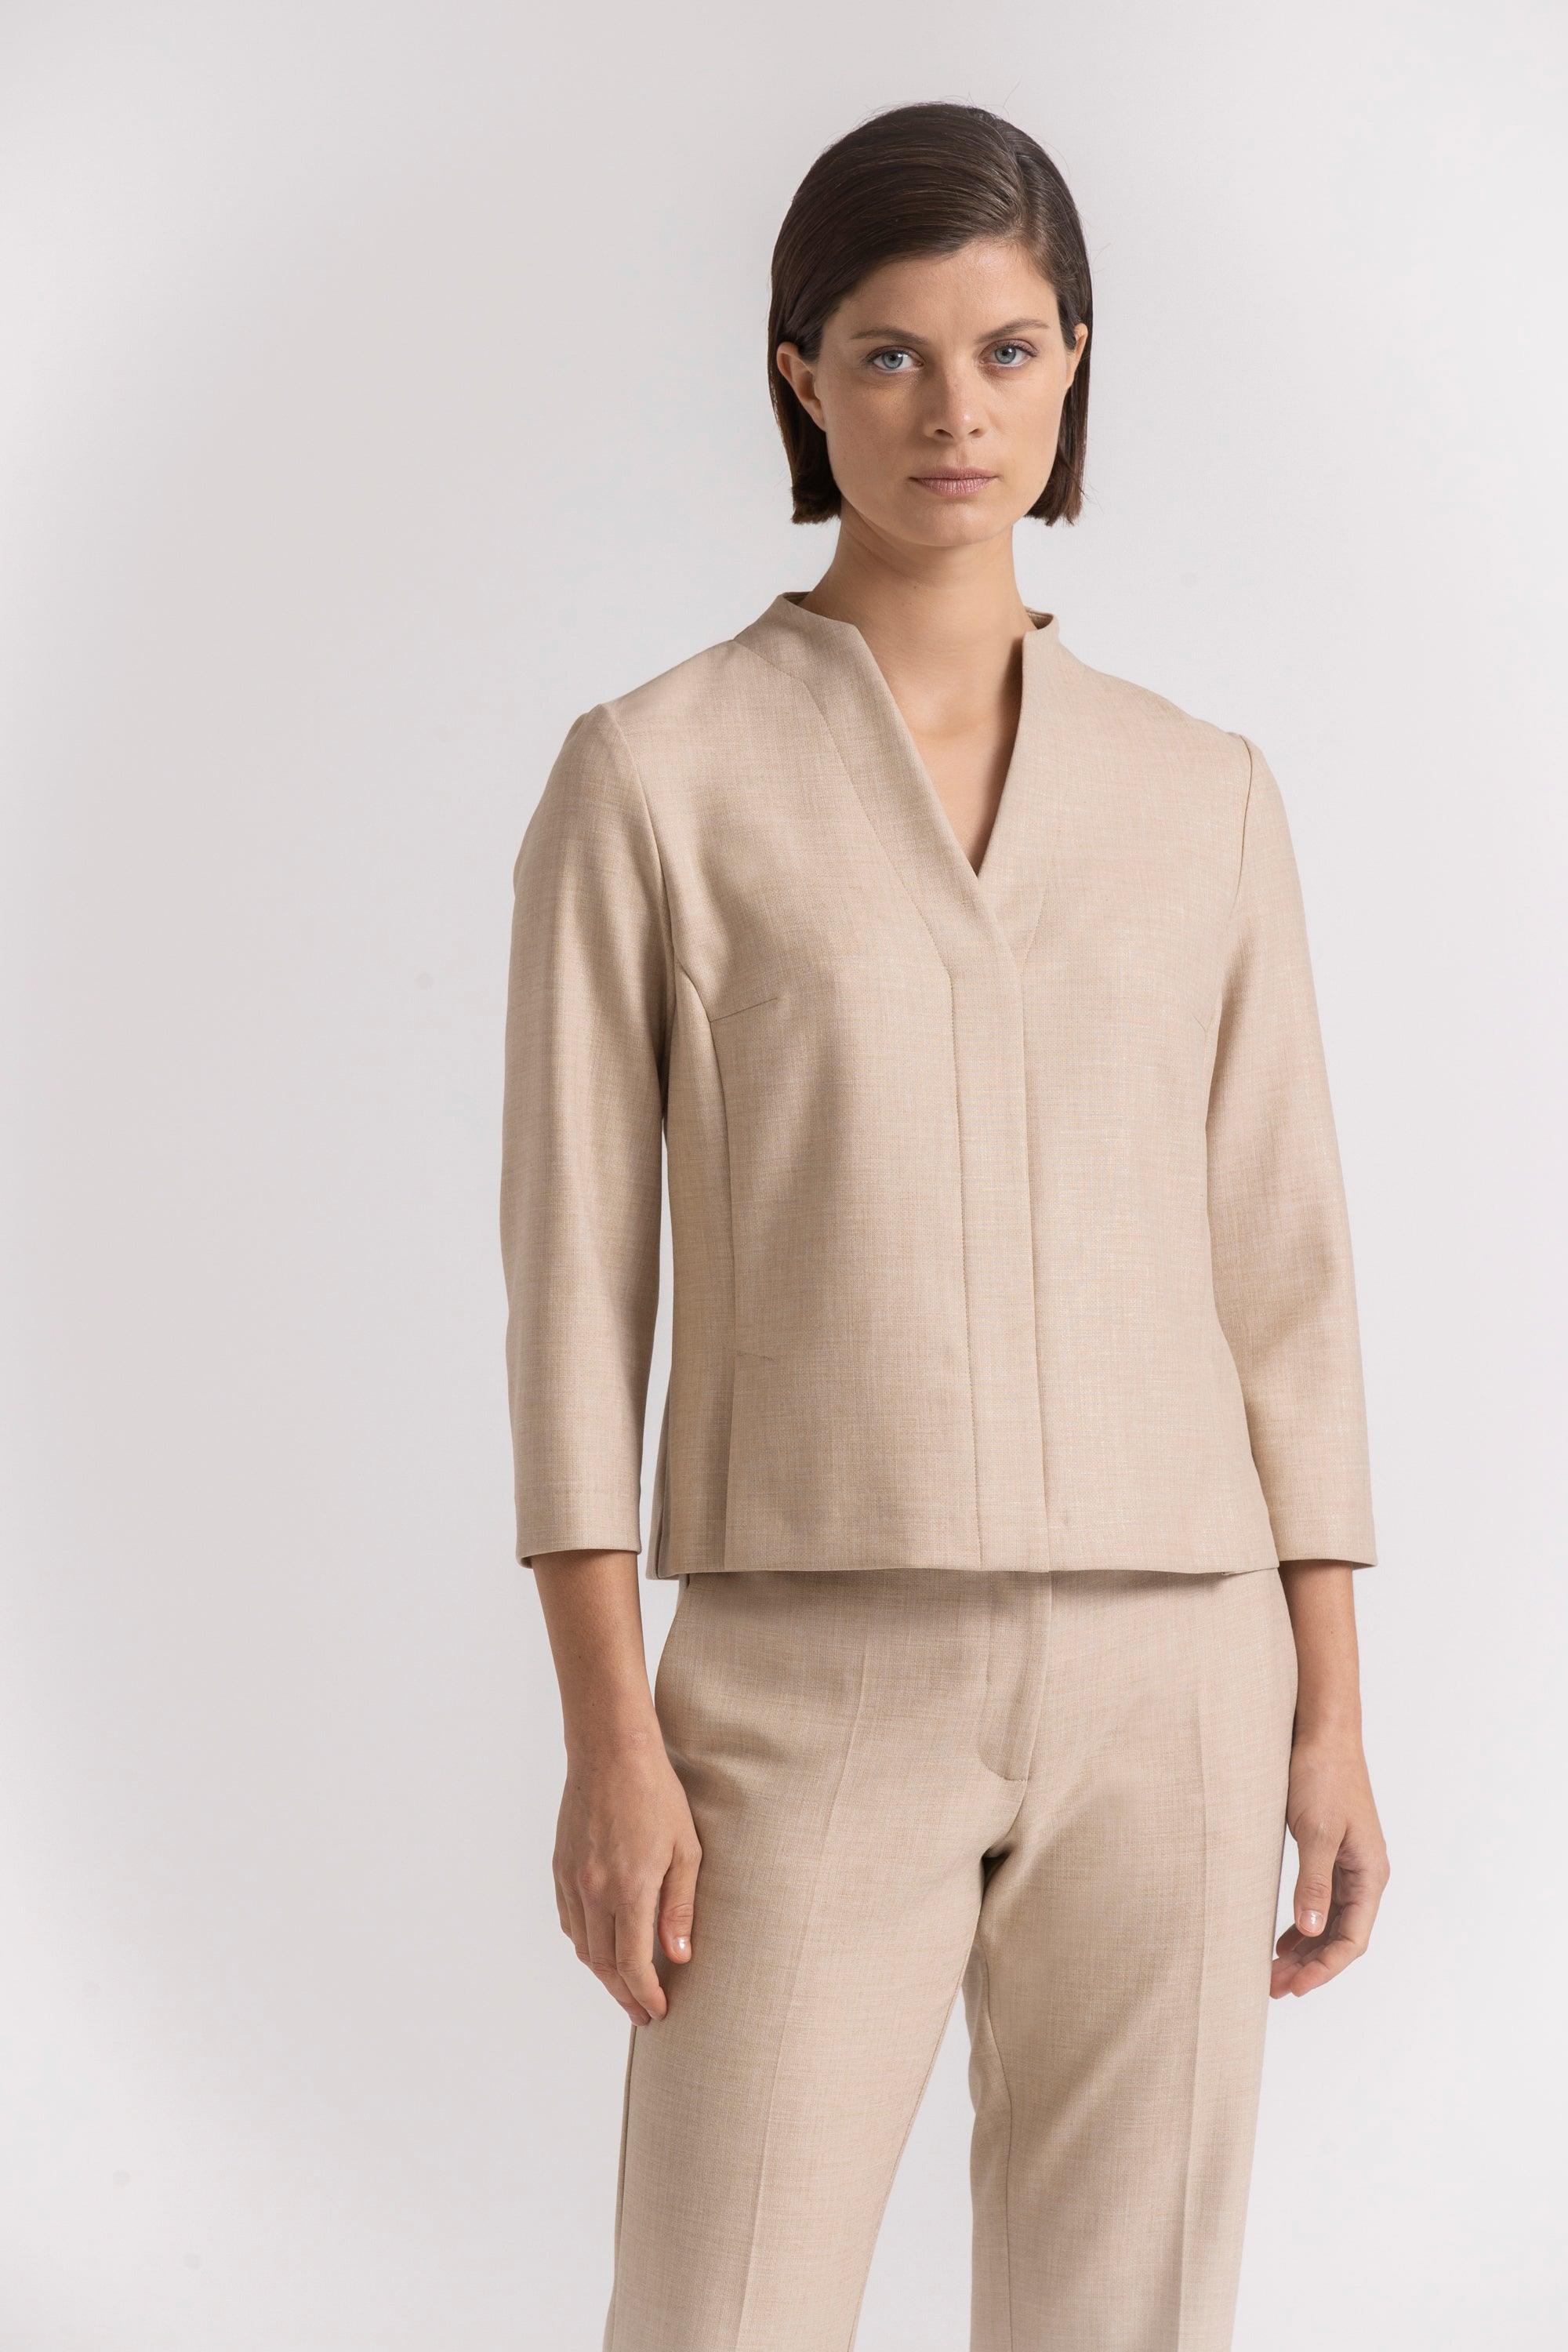 Bloes Ecru Gigue ( Hyatt 624/2208 ) - Delaere Womenswear